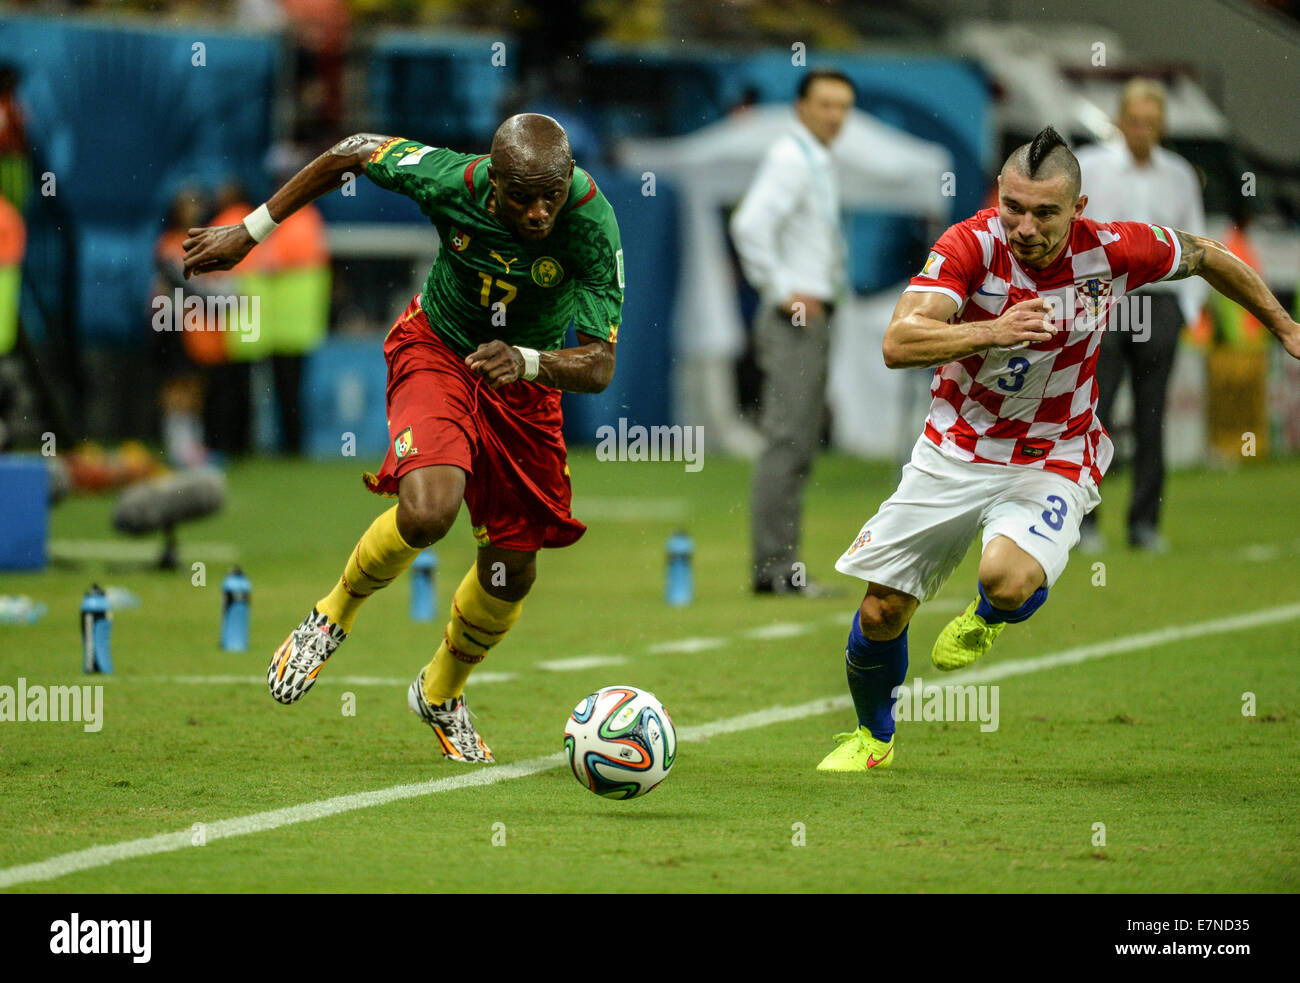 Stephane Mbia and Danijel Pranjic. Croatia v Cameroon. Group match. FIFA World Cup 2014 Brazil. Arena Amazonia, Manaus. 18 Jun 2 Stock Photo